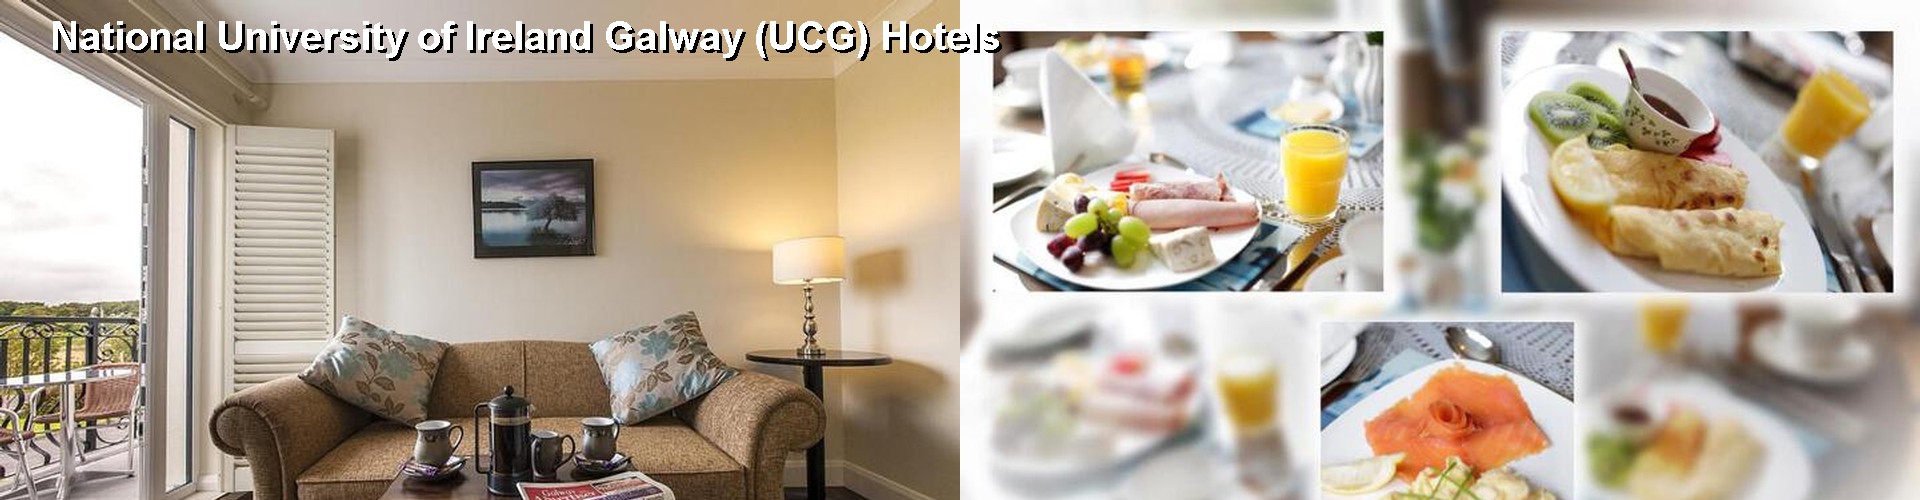 5 Best Hotels near National University of Ireland Galway (UCG)